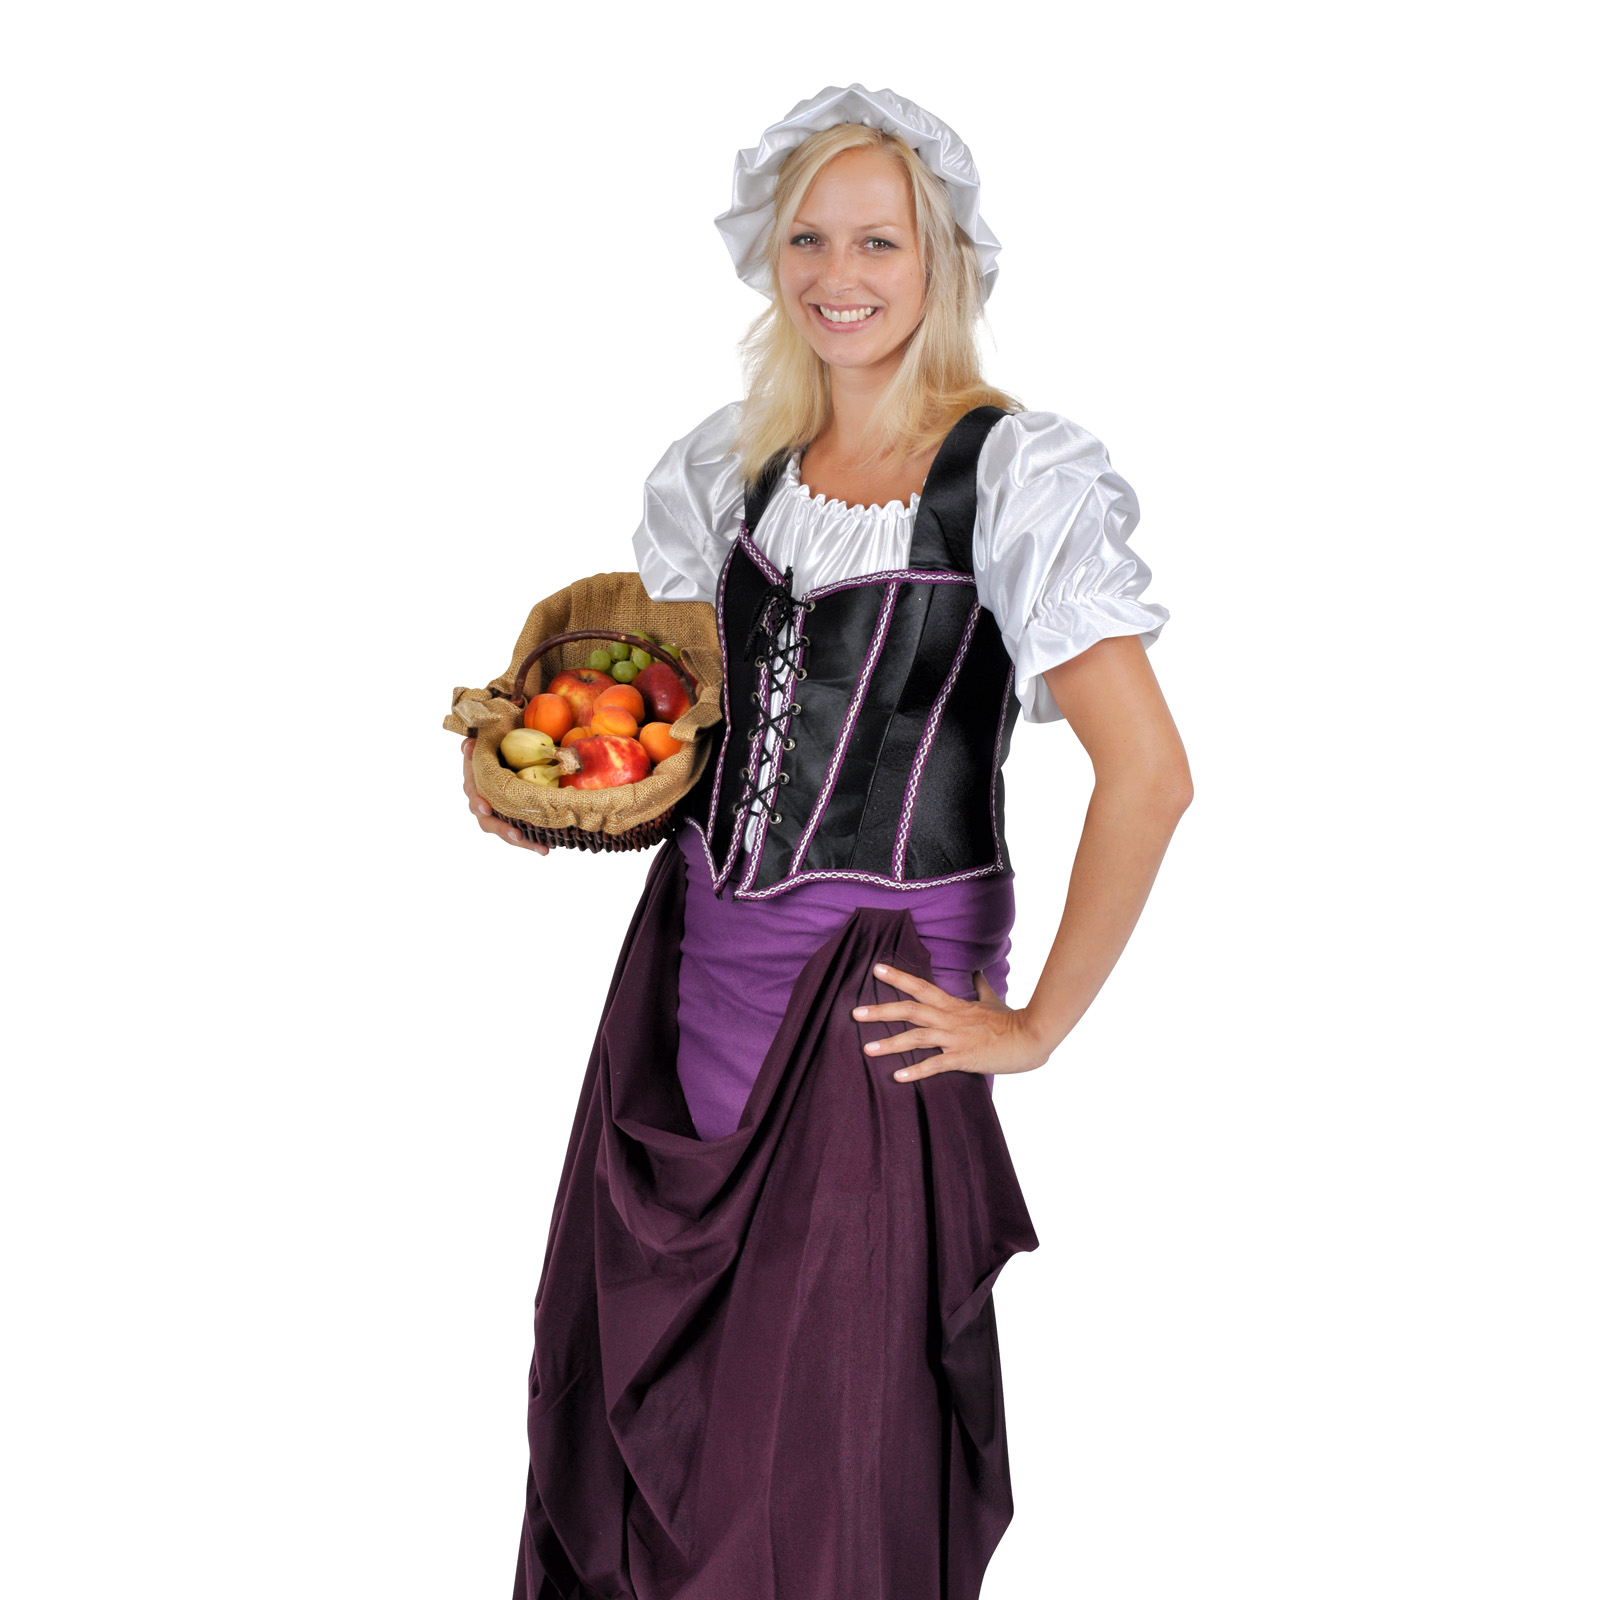 Innkeeper - Medieval Costume